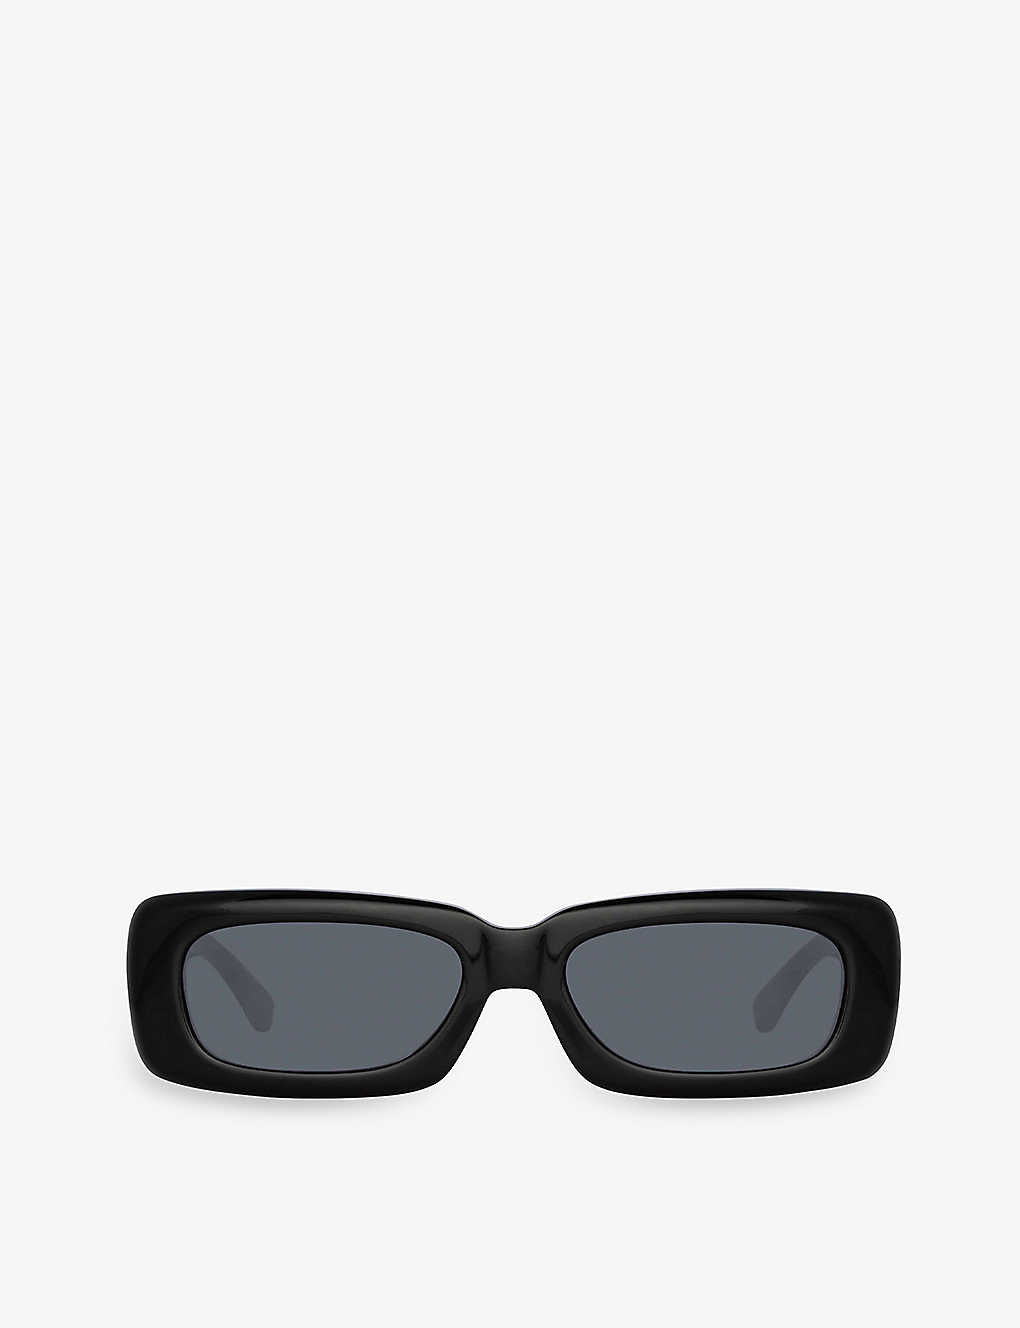 Audio-technica Womens Black The Attico X Linda Farrow Mini Marfa Rectangular-frame Acetate Sunglasse